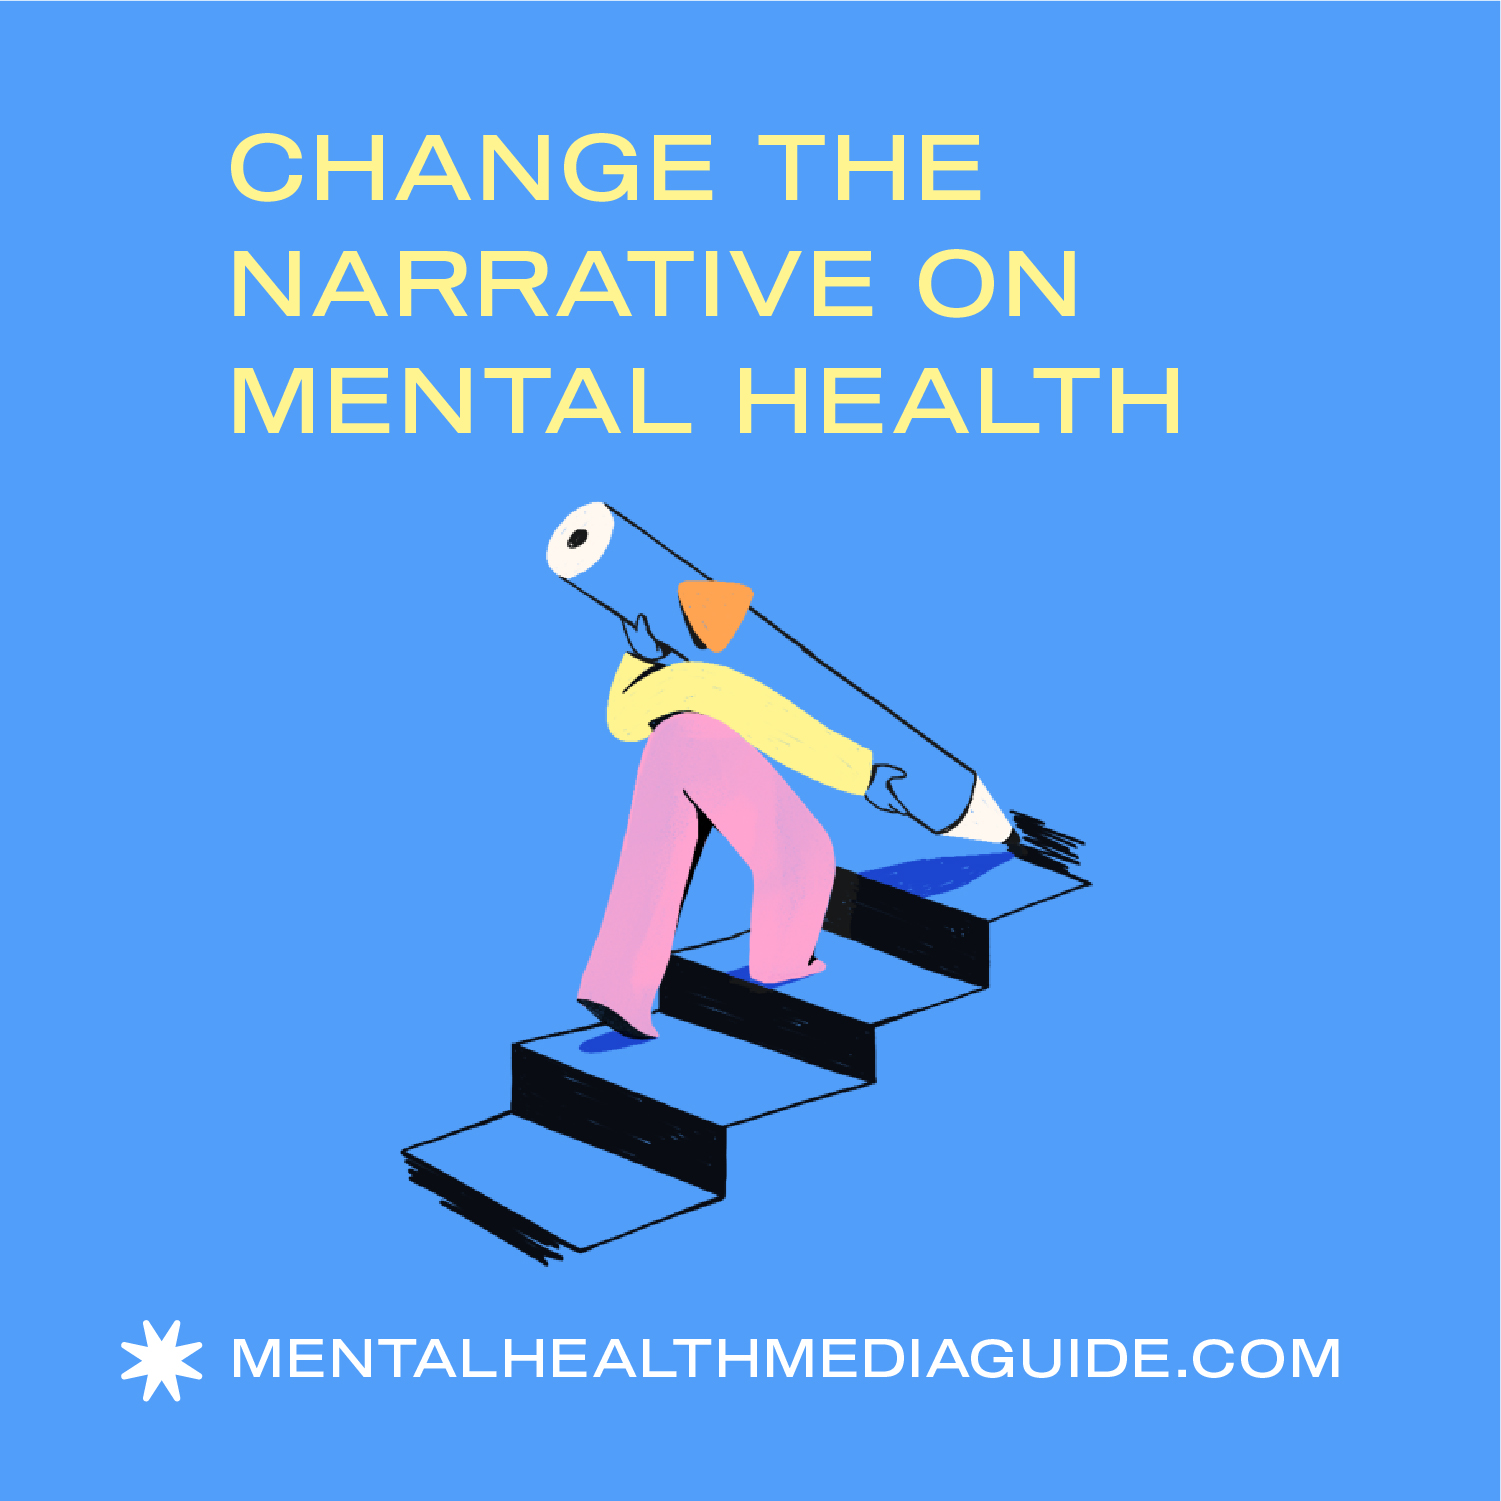 Mental Health Media Guide